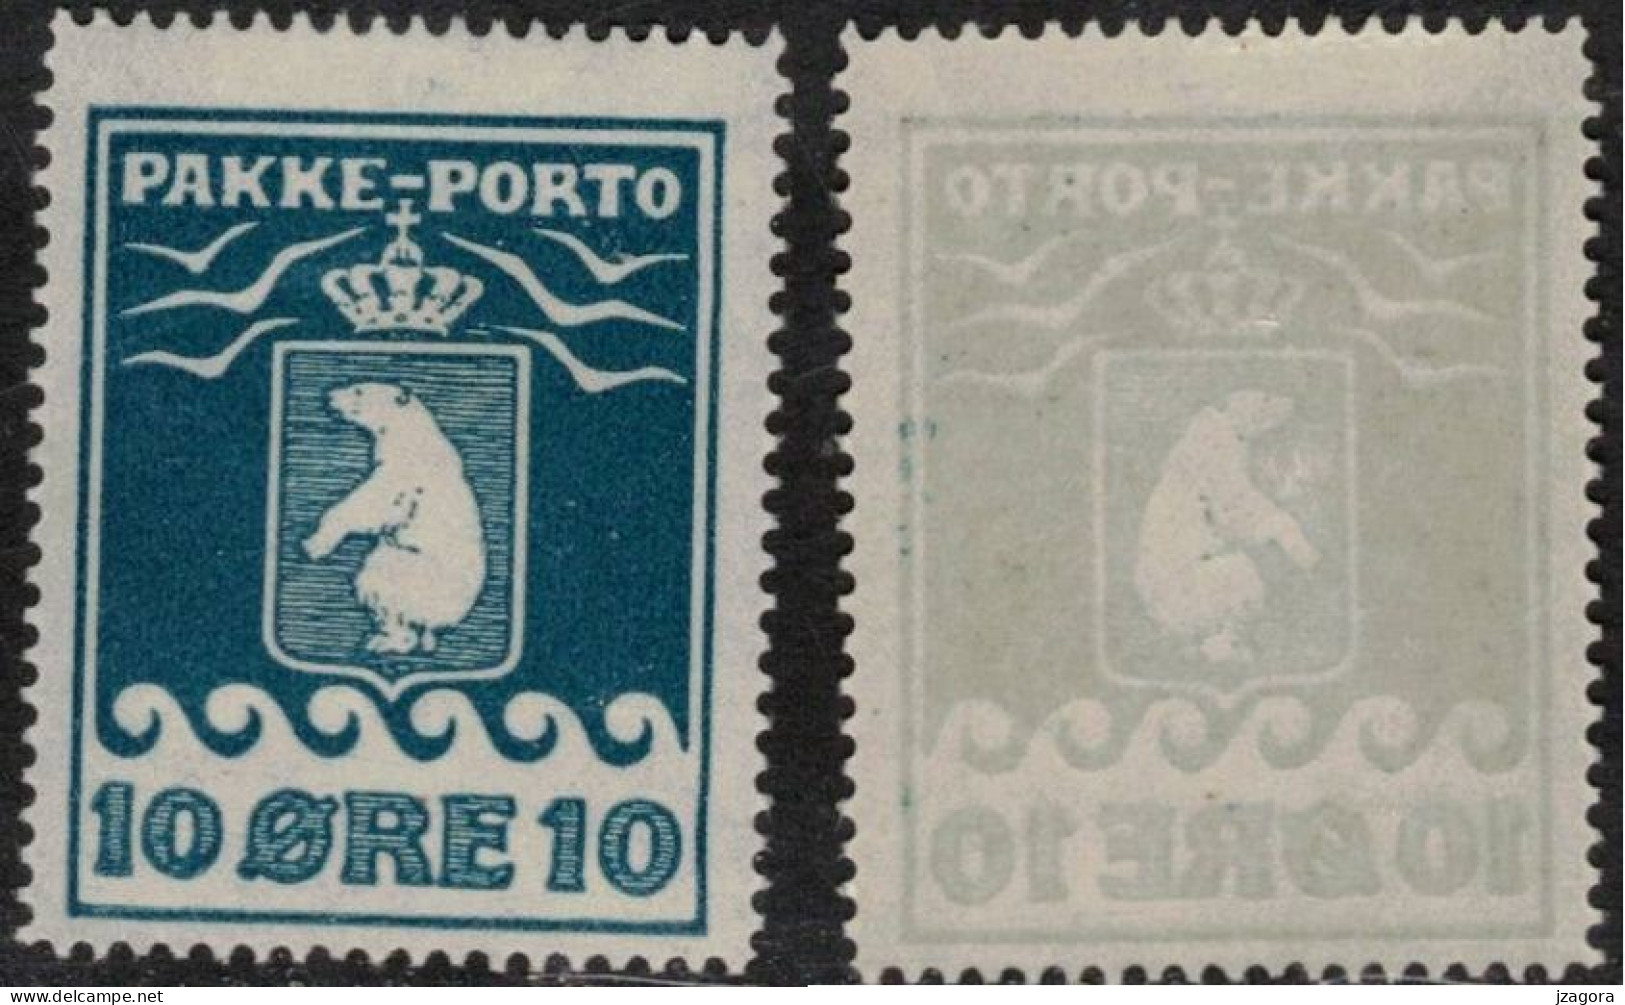 GRÖNLAND GROENLAND GREENLAND 1915 PAKKE PORTO PARCEL POST 10 ÖRE Perf 11 ½ MI 7A FACIT P7 II - MINT NEVER HINGED (**) - Parcel Post